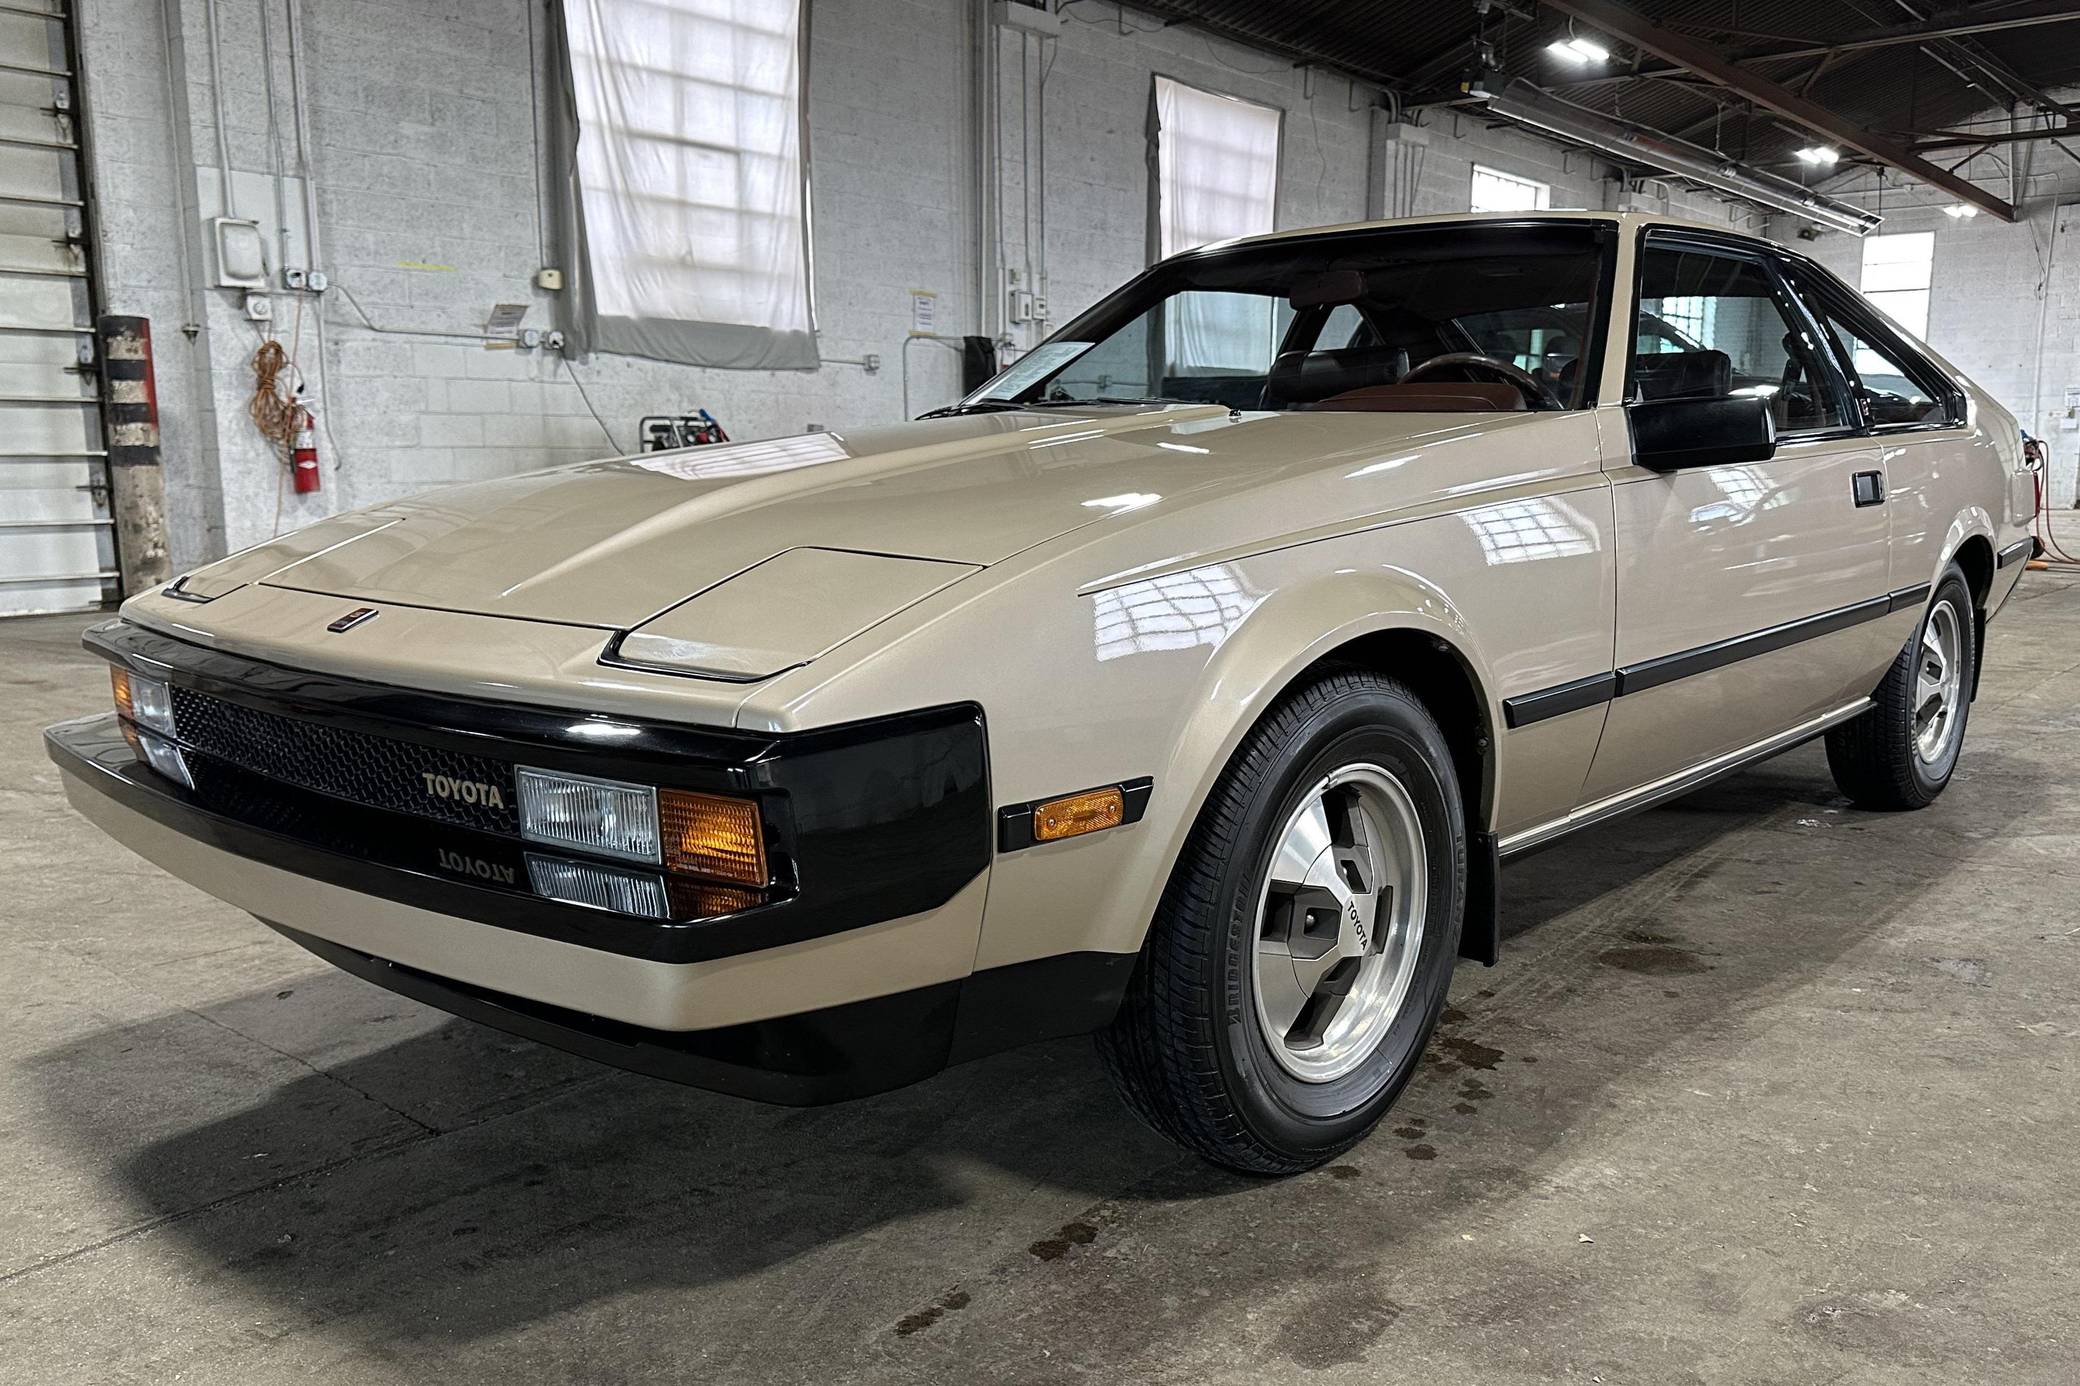 1984 Nissan Patrol 4x4 for Sale - Cars & Bids